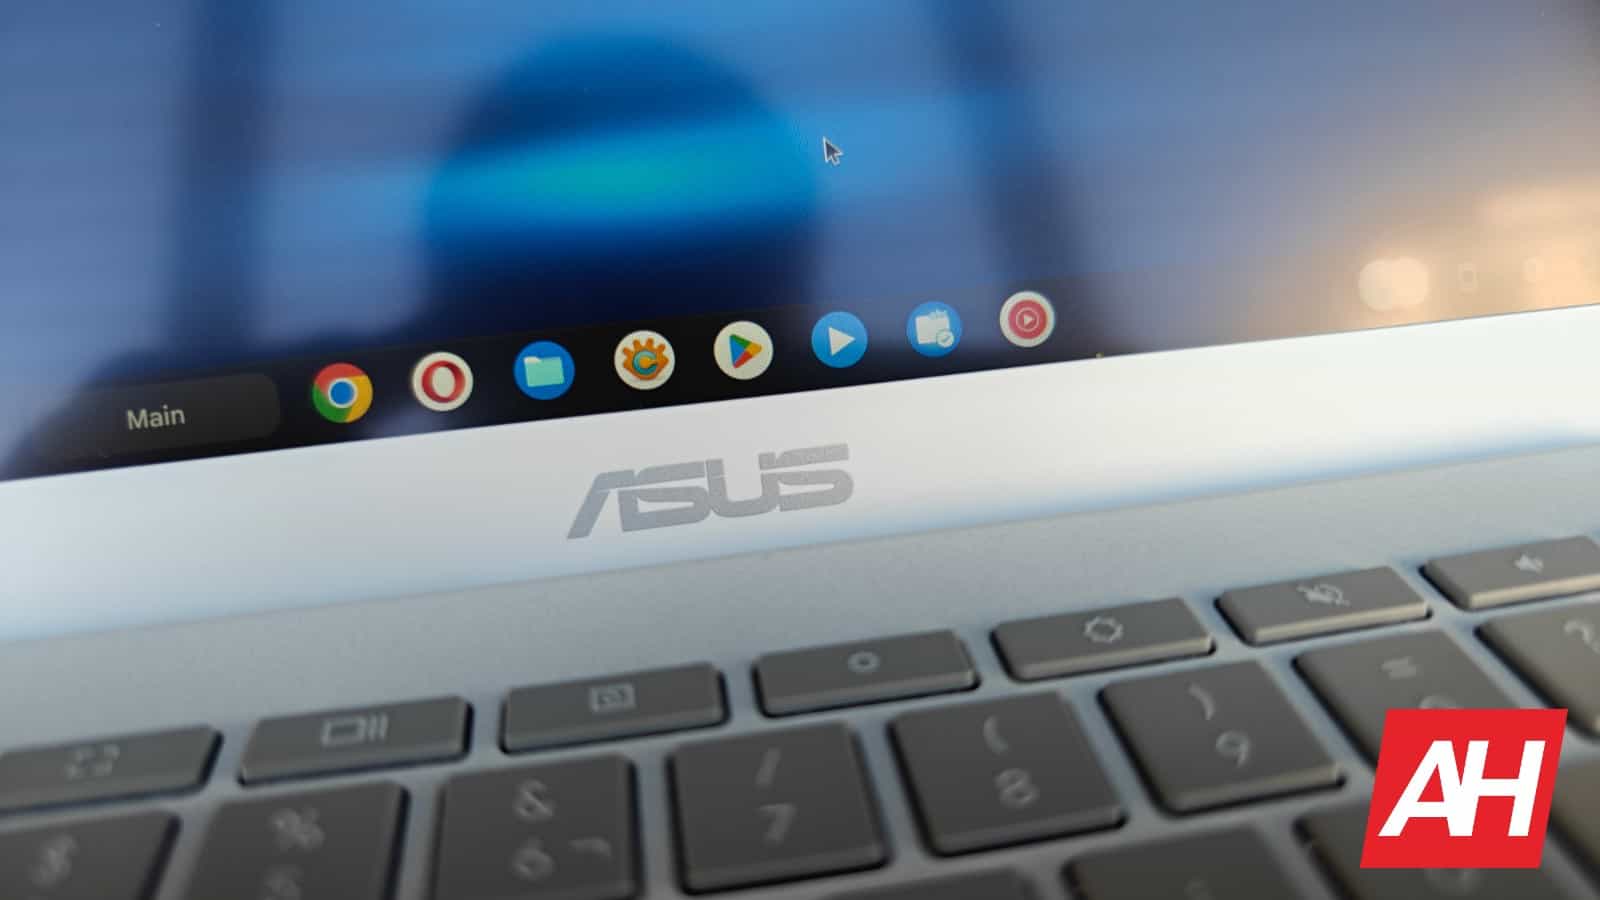 AH ASUS Chromebook Plus CX34 logo image 66